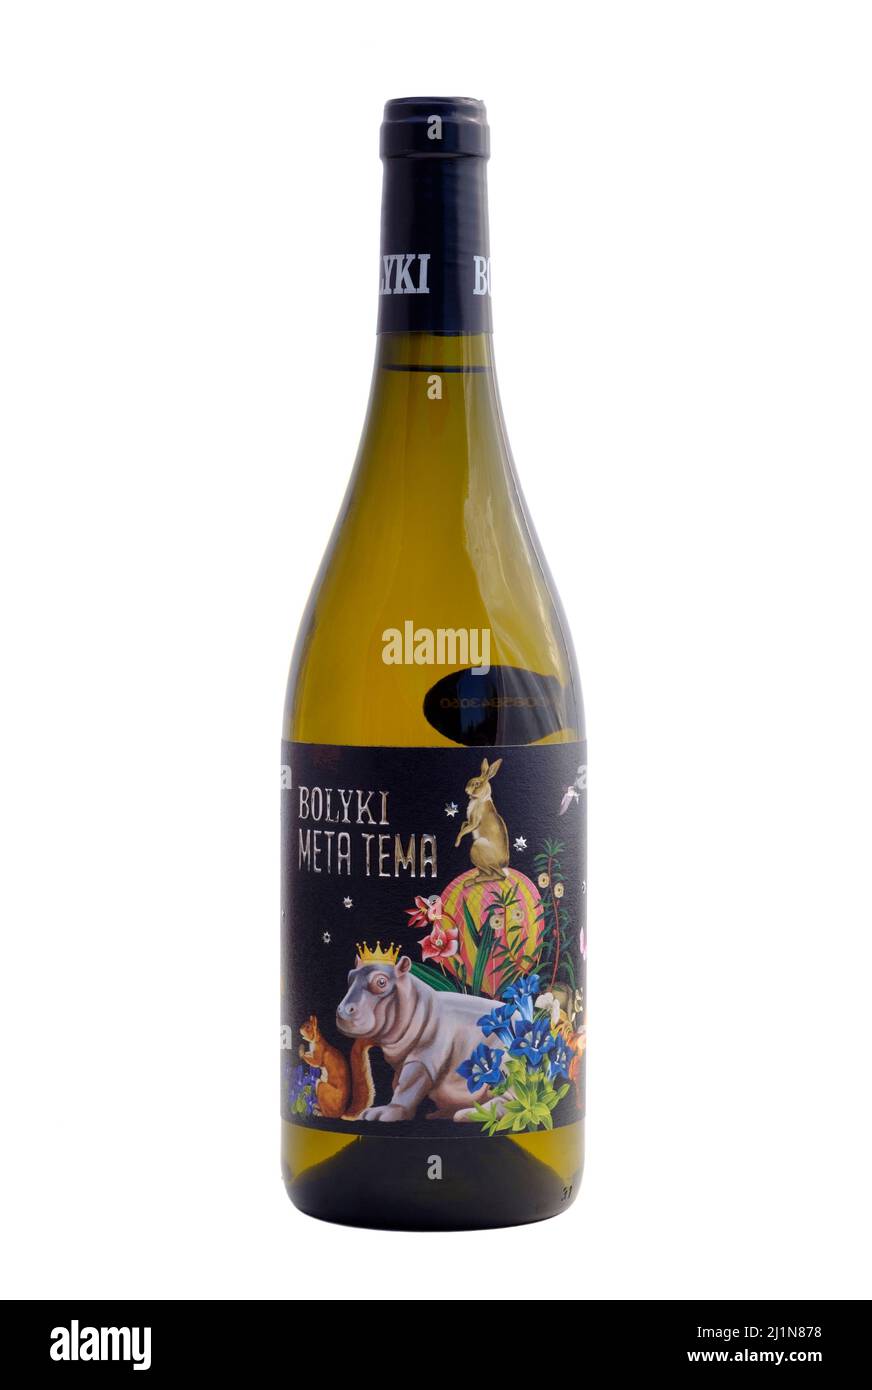 botella de bolyki meta tema hungarian de vino blanco dulce cortado sobre fondo blanco Foto de stock